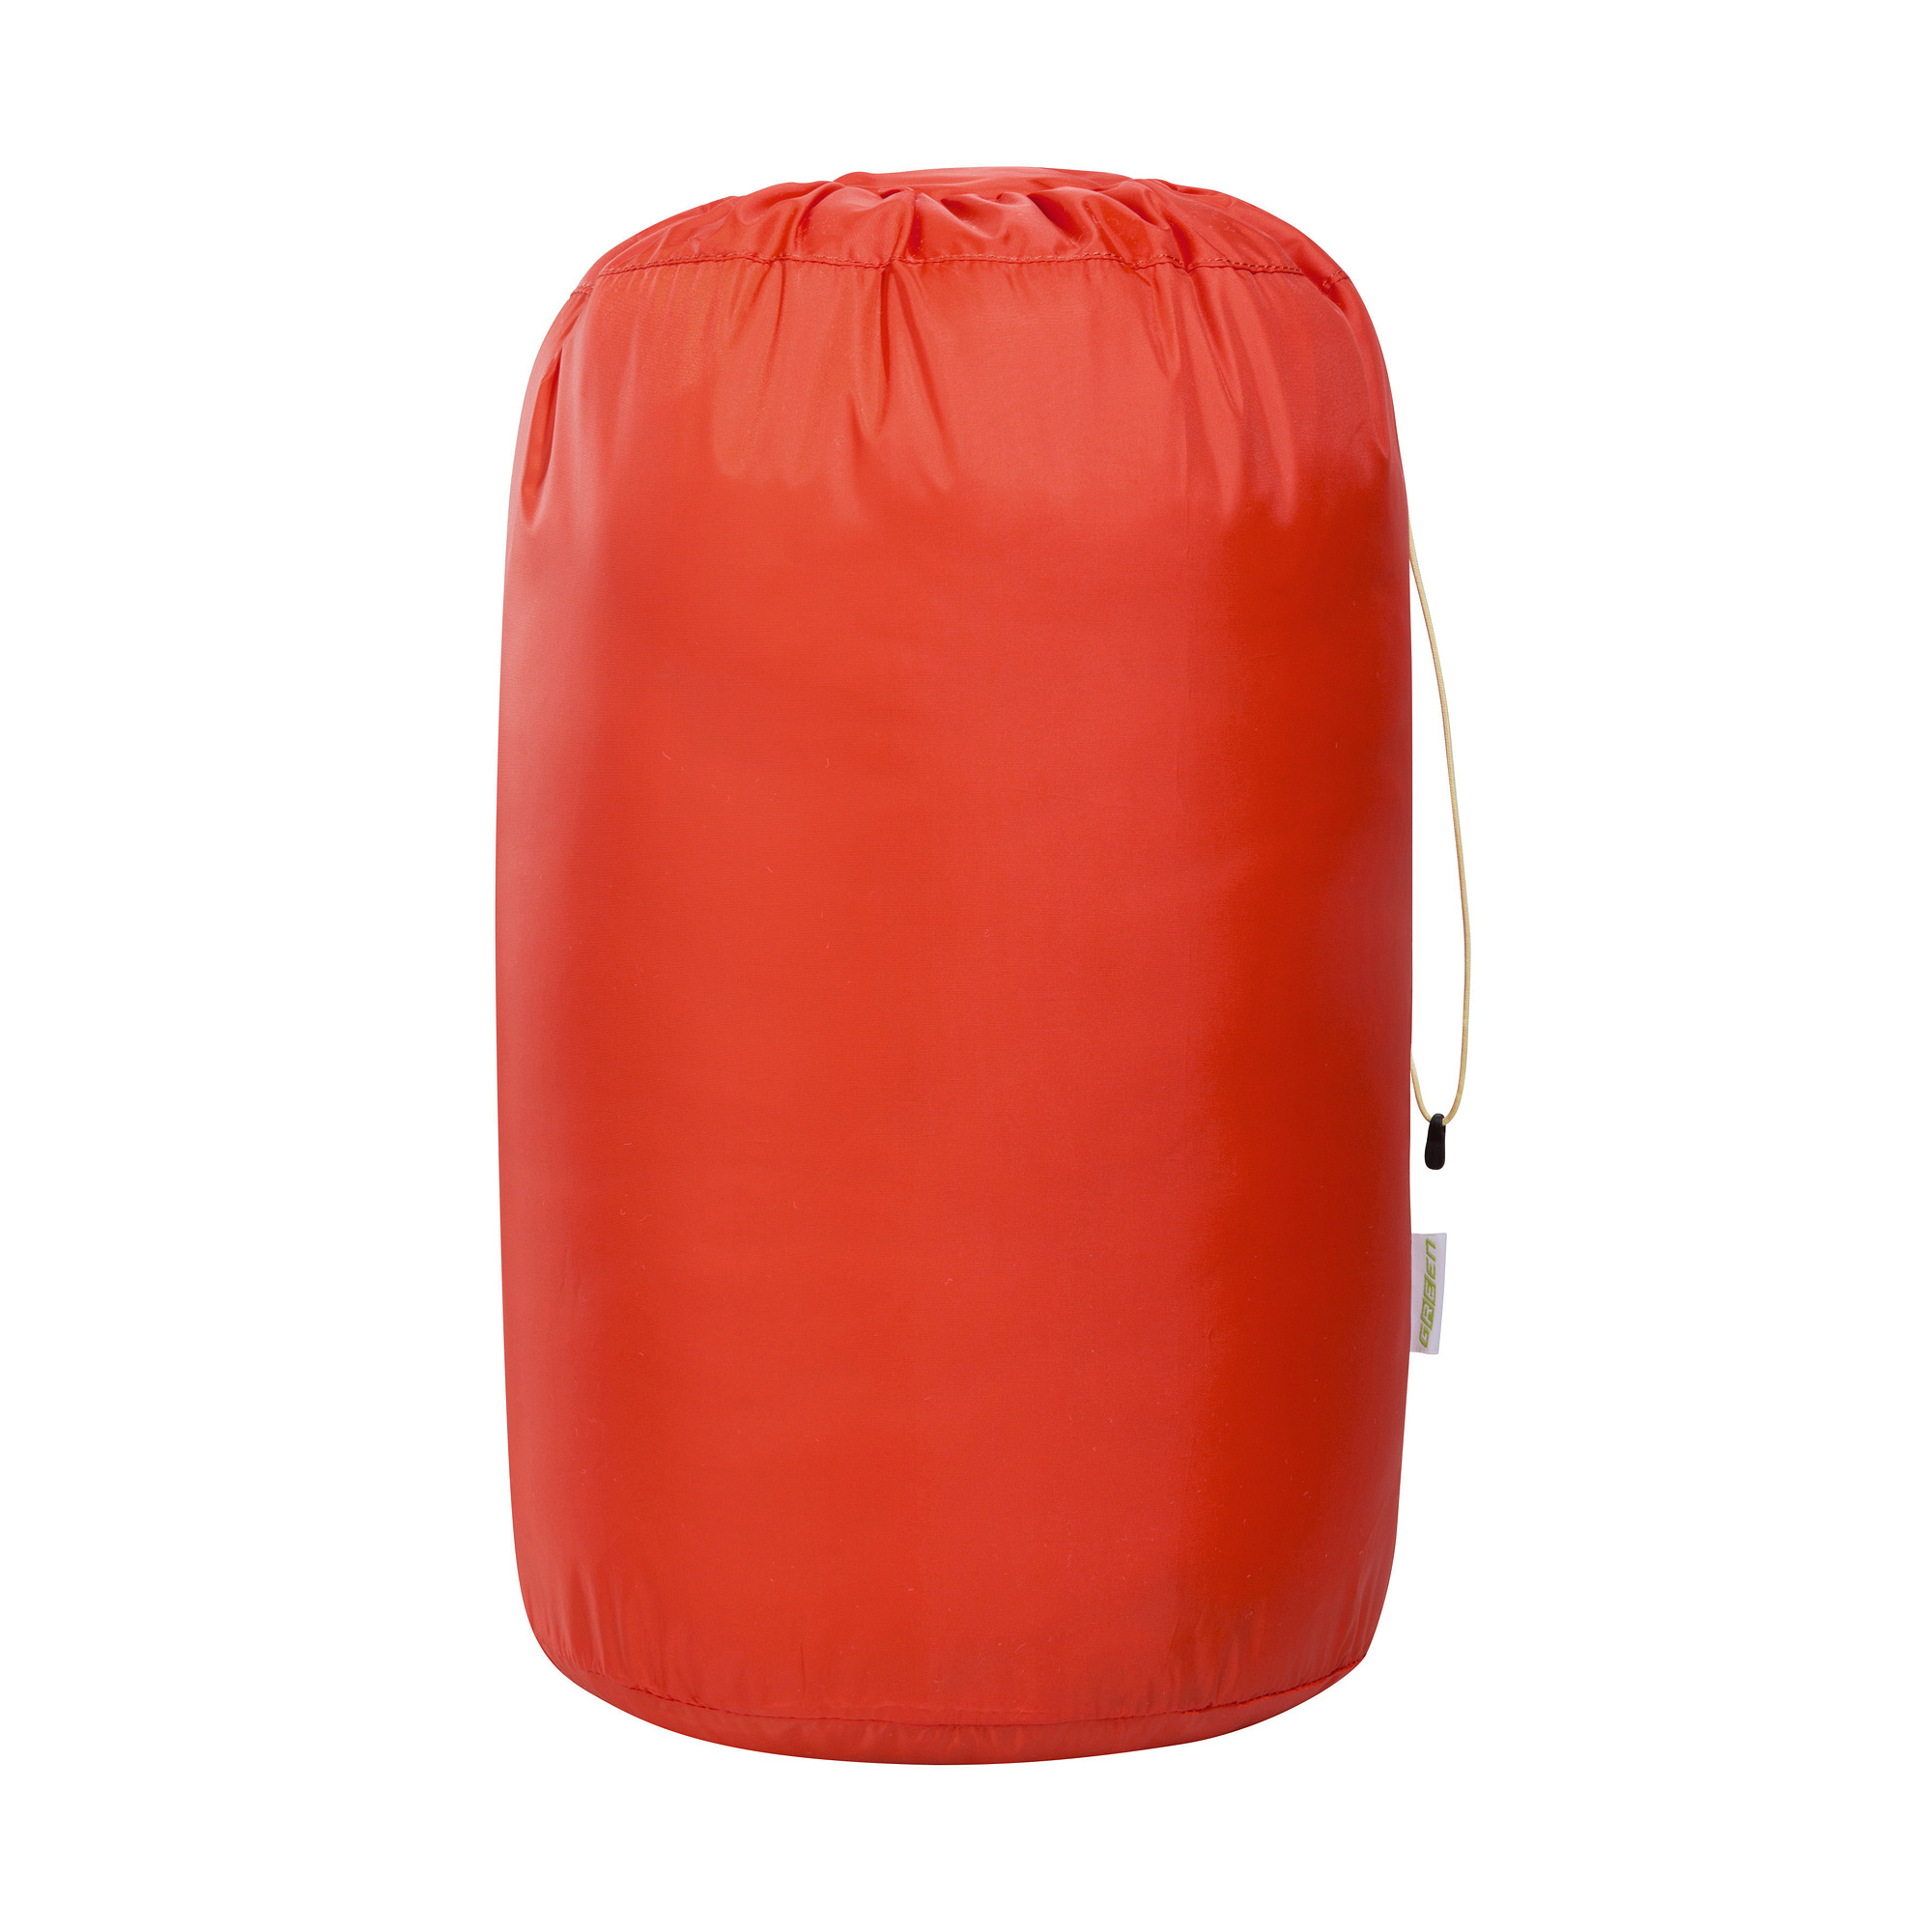 Tatonka Stuff Bag 15l red orange rot Reisezubehör 4013236356007